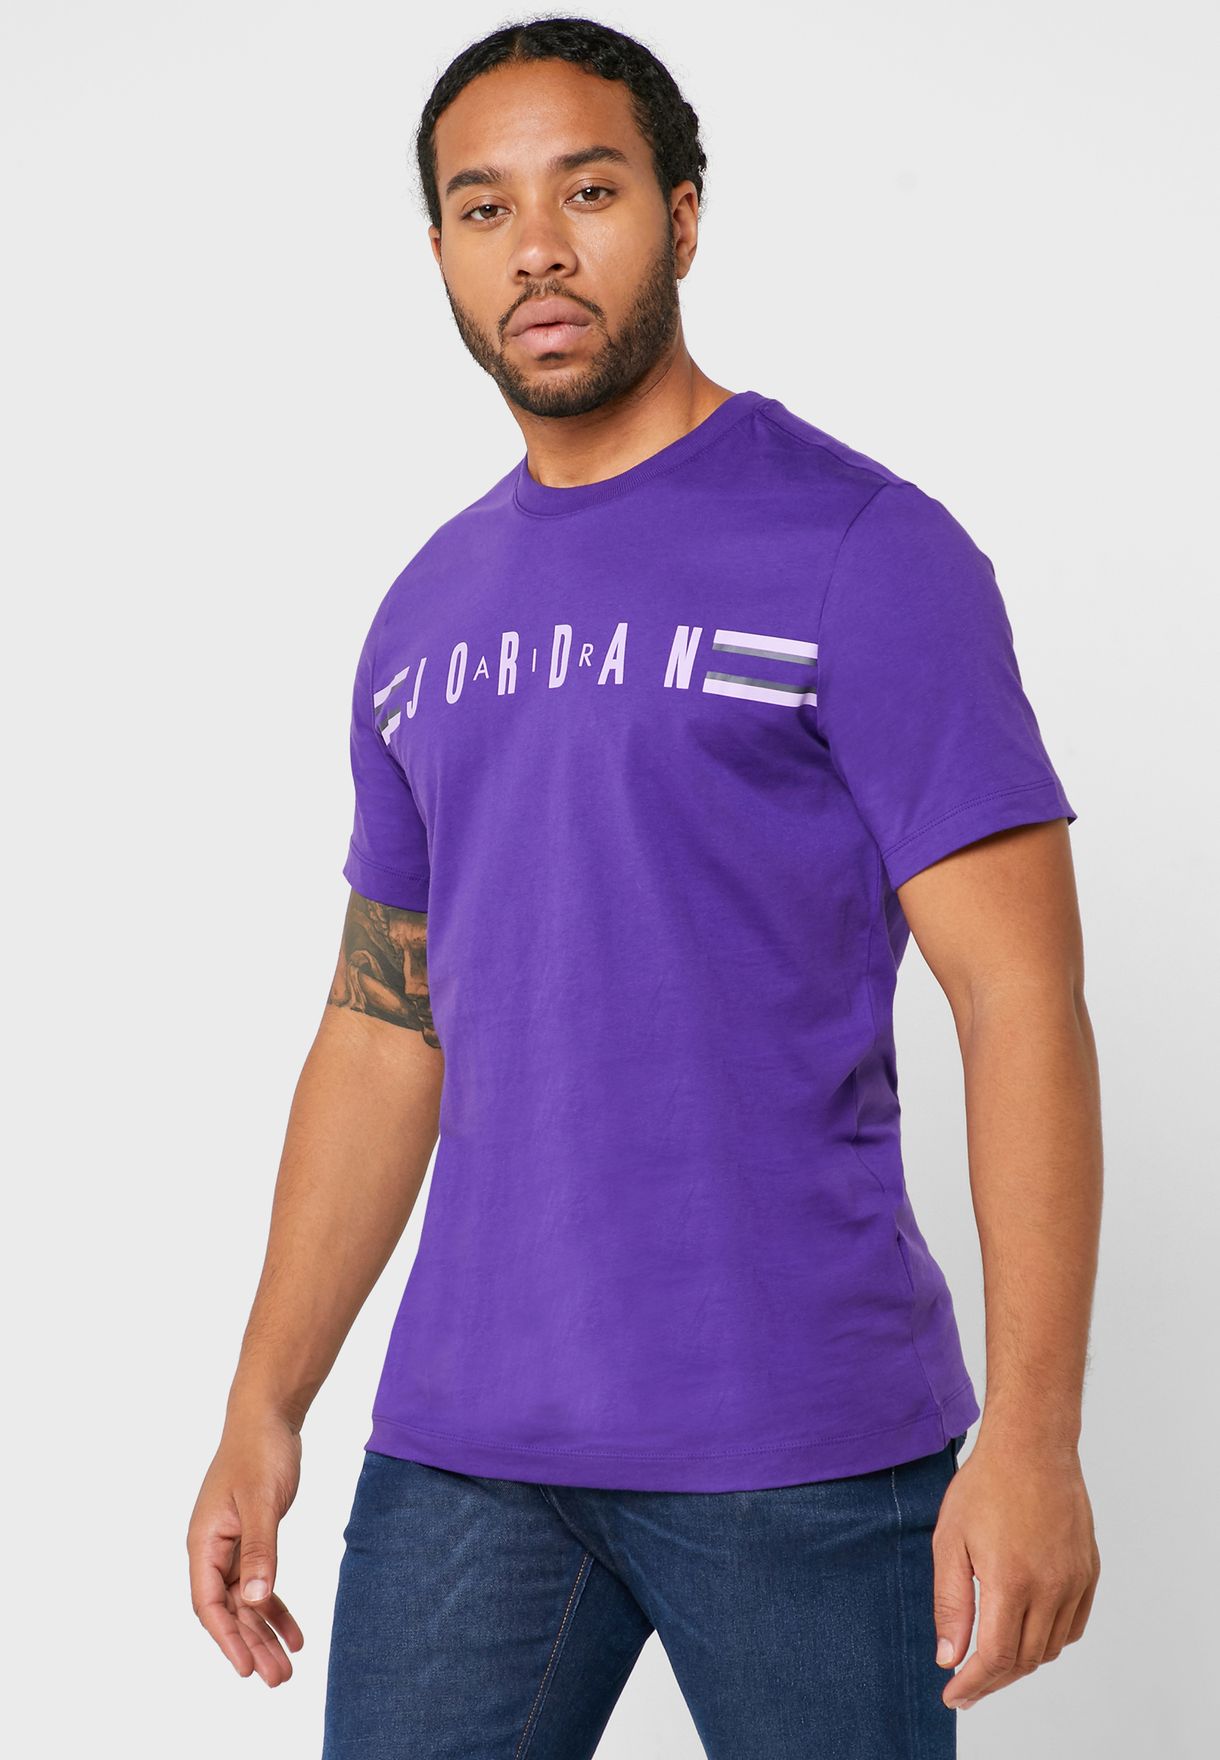 purple jordan shirts